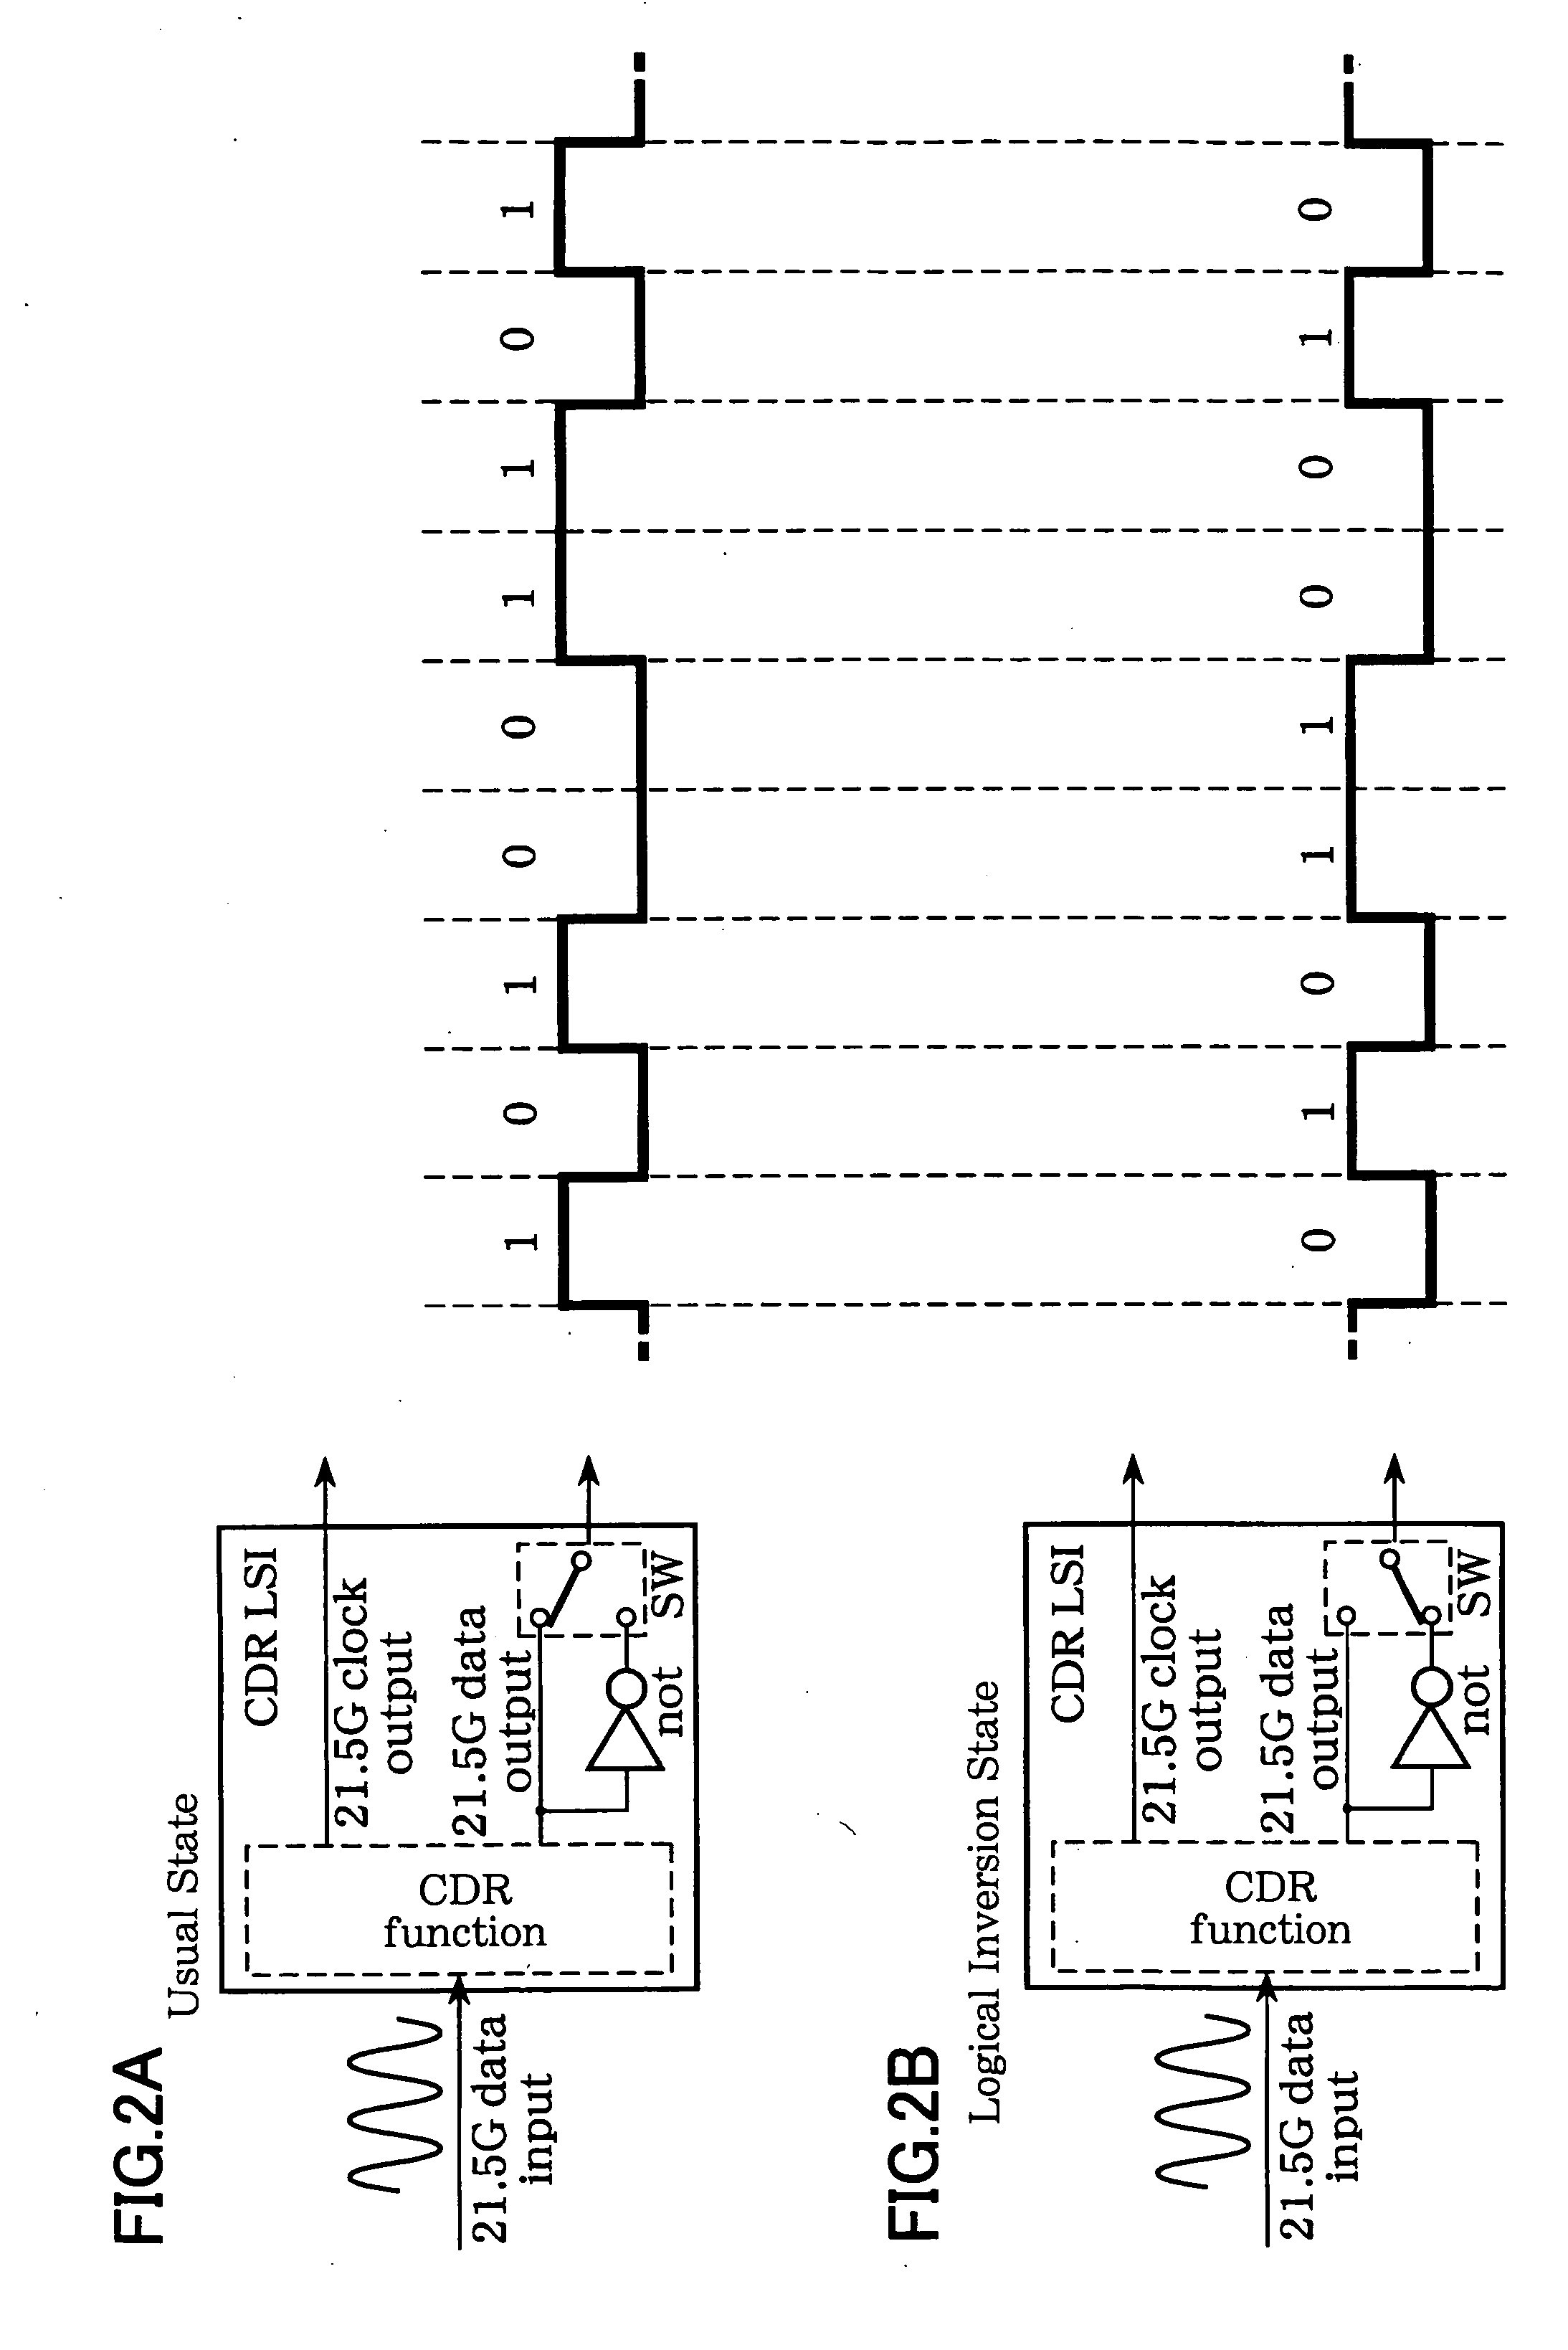 Optical signal reception device